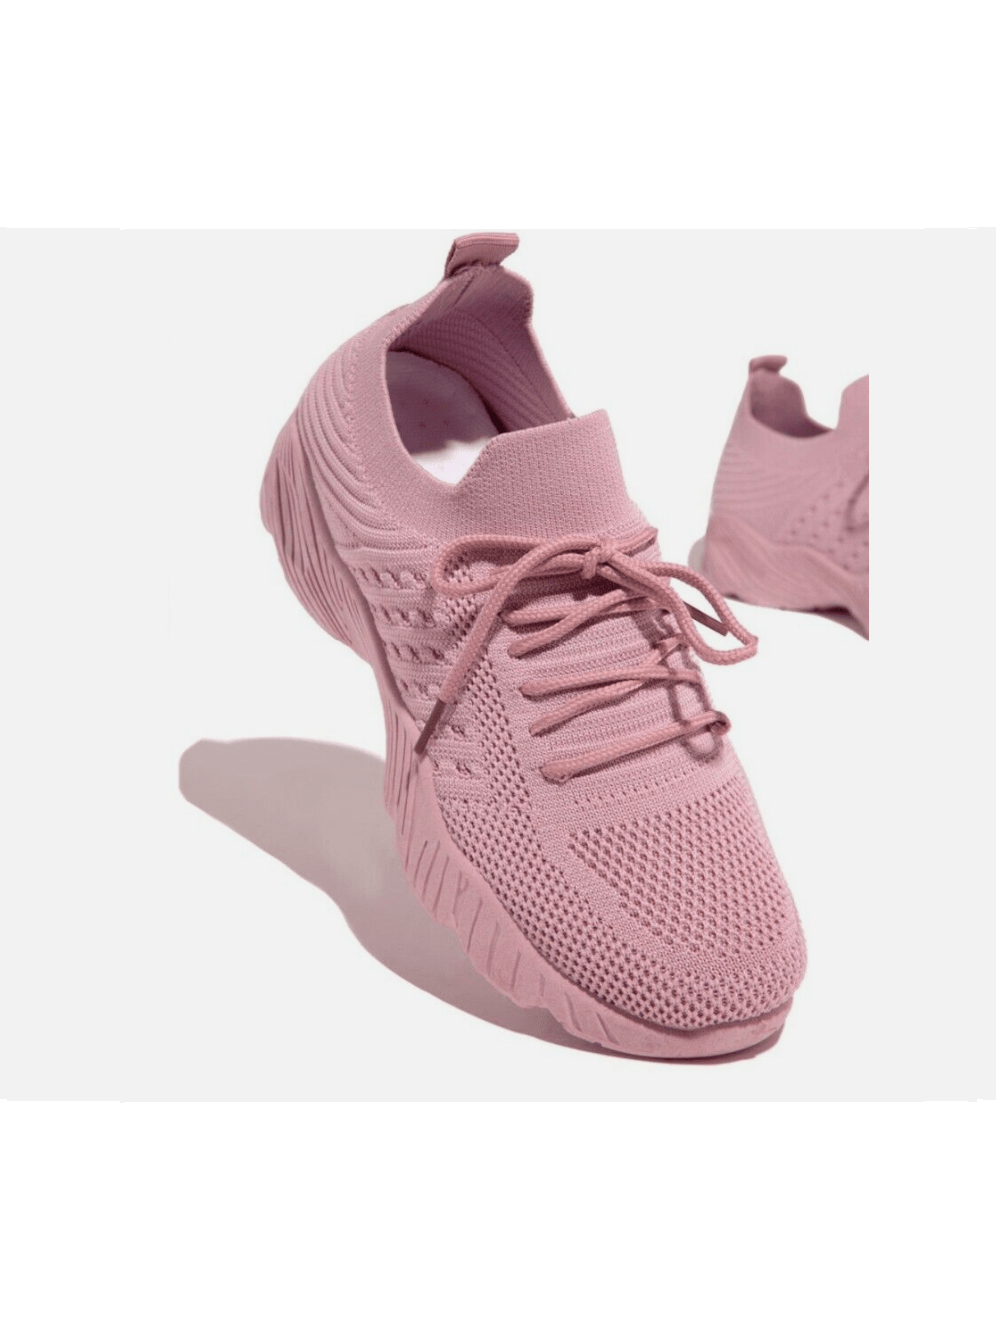 Women Running Trainers Ladies Sneakers Slip On Walking Gym Comfy Shoes-Pink-2